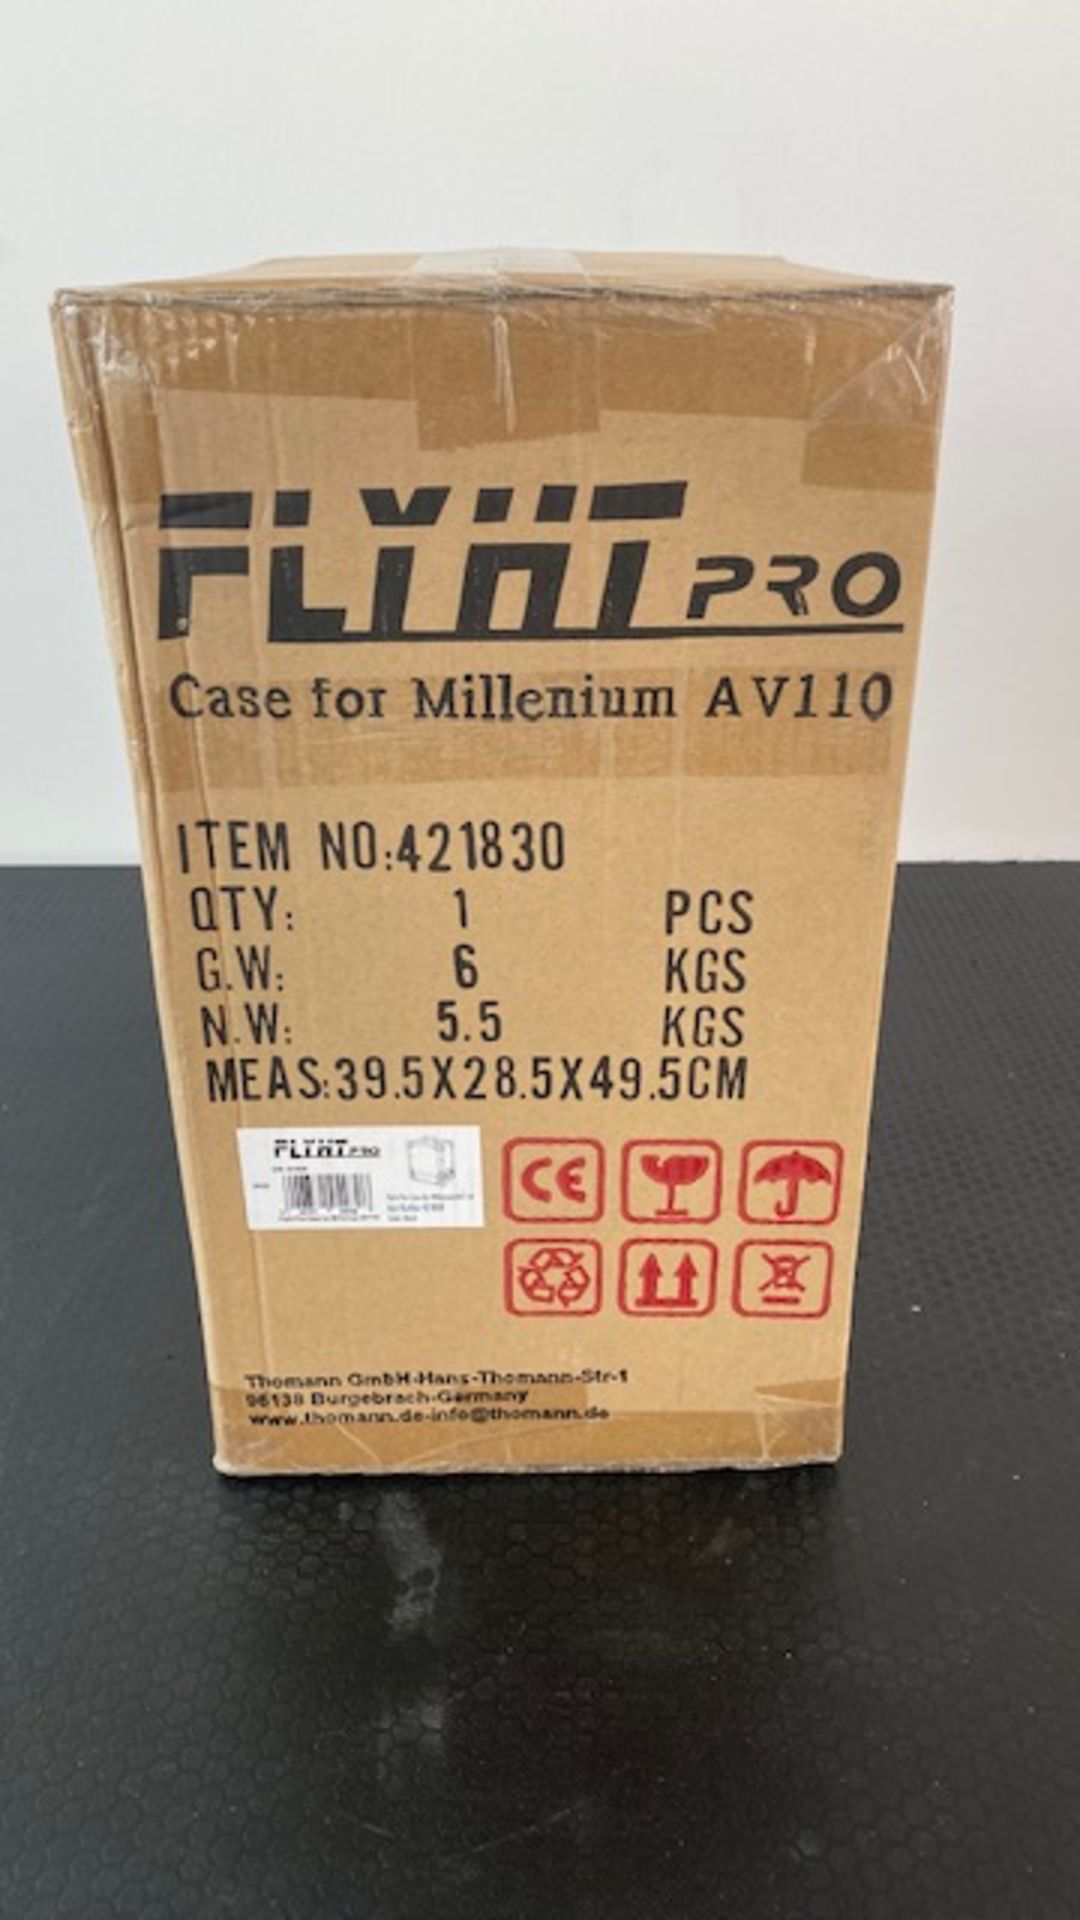 1 x FLYHT PRO Flight Case For Millenium AV110 - New / Unopened - Ref: 926 - CL581 - Image 2 of 6